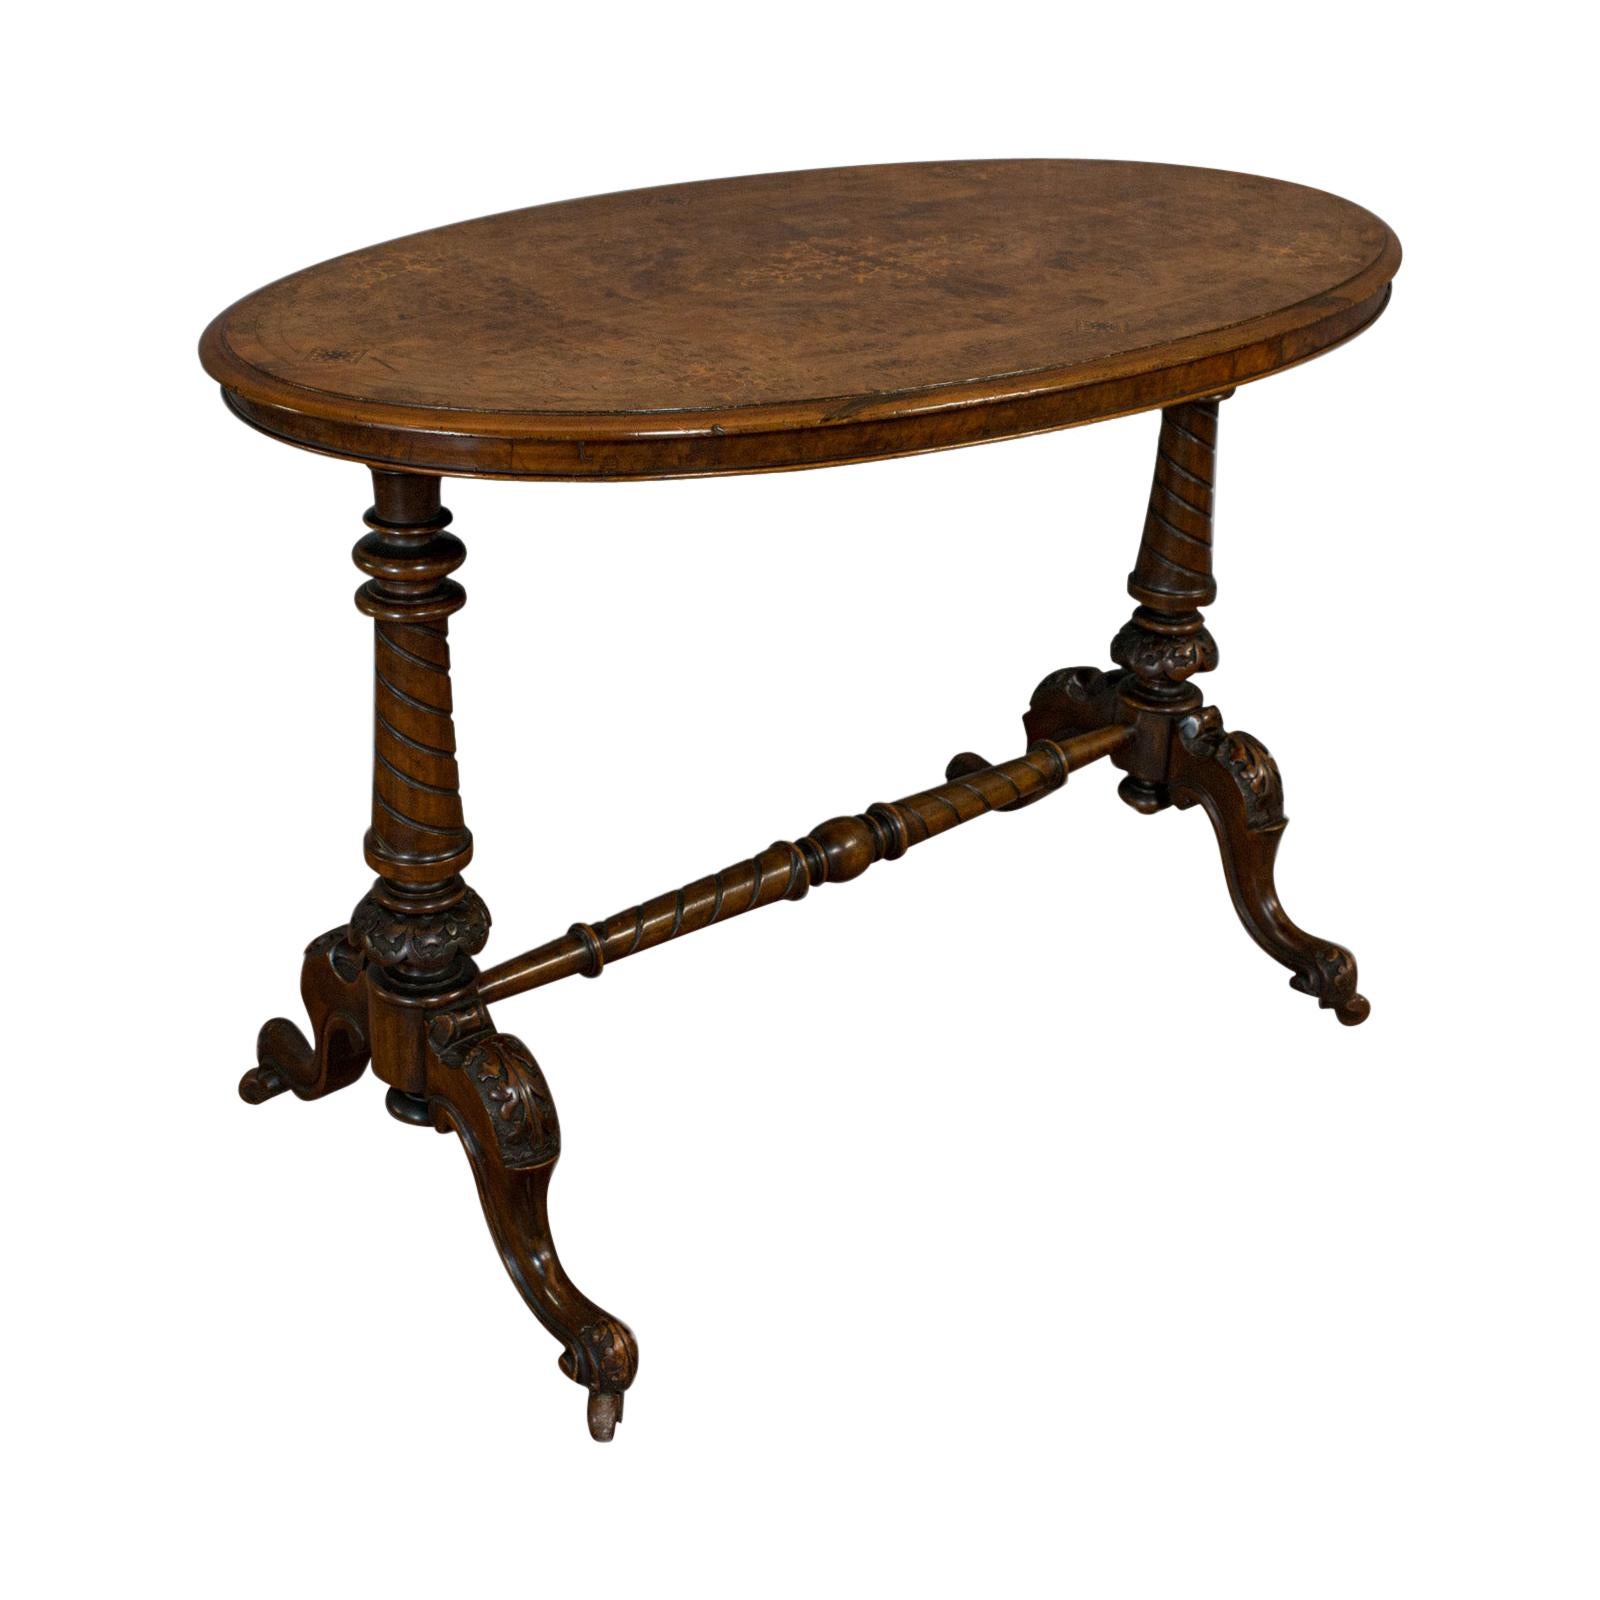 Antique Oval Table, English, Burr Walnut, Centre, Side, Victorian, circa 1870